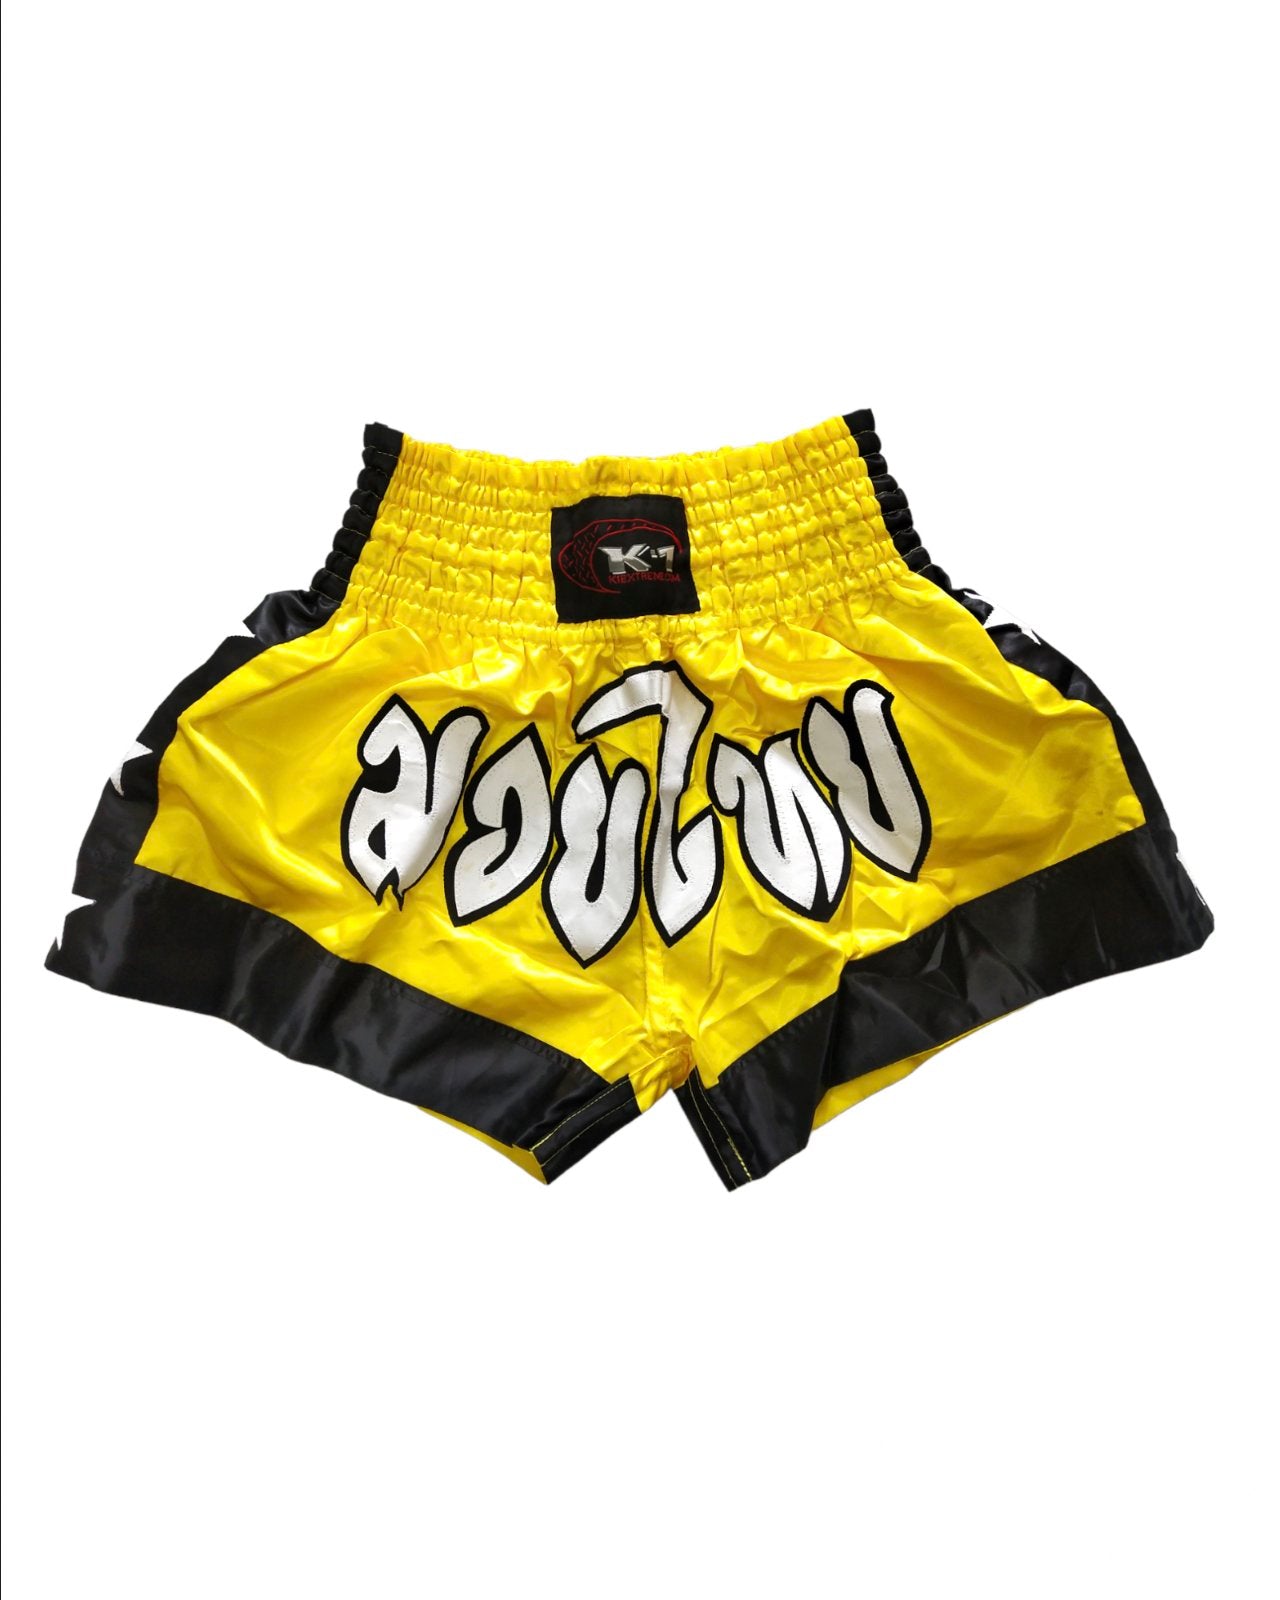 K-1 Muaythai Fight Shorts [Yellow/Black] – K1 Extreme Sportshop